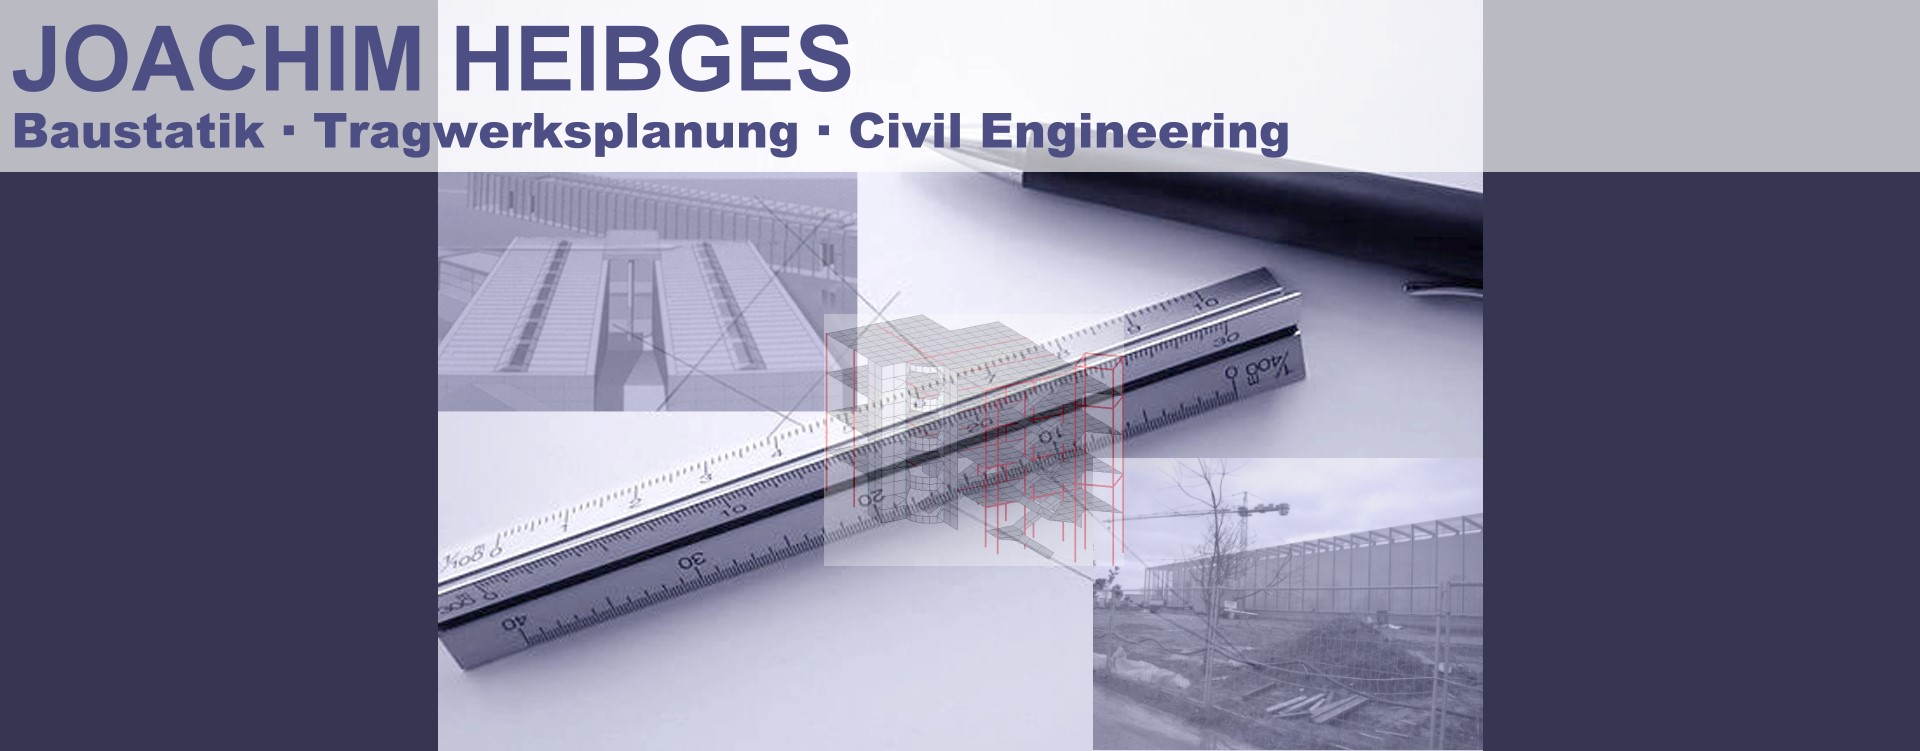 Joachim Heibges - Baustatik - Tragwerksplanung - Civil Engineering